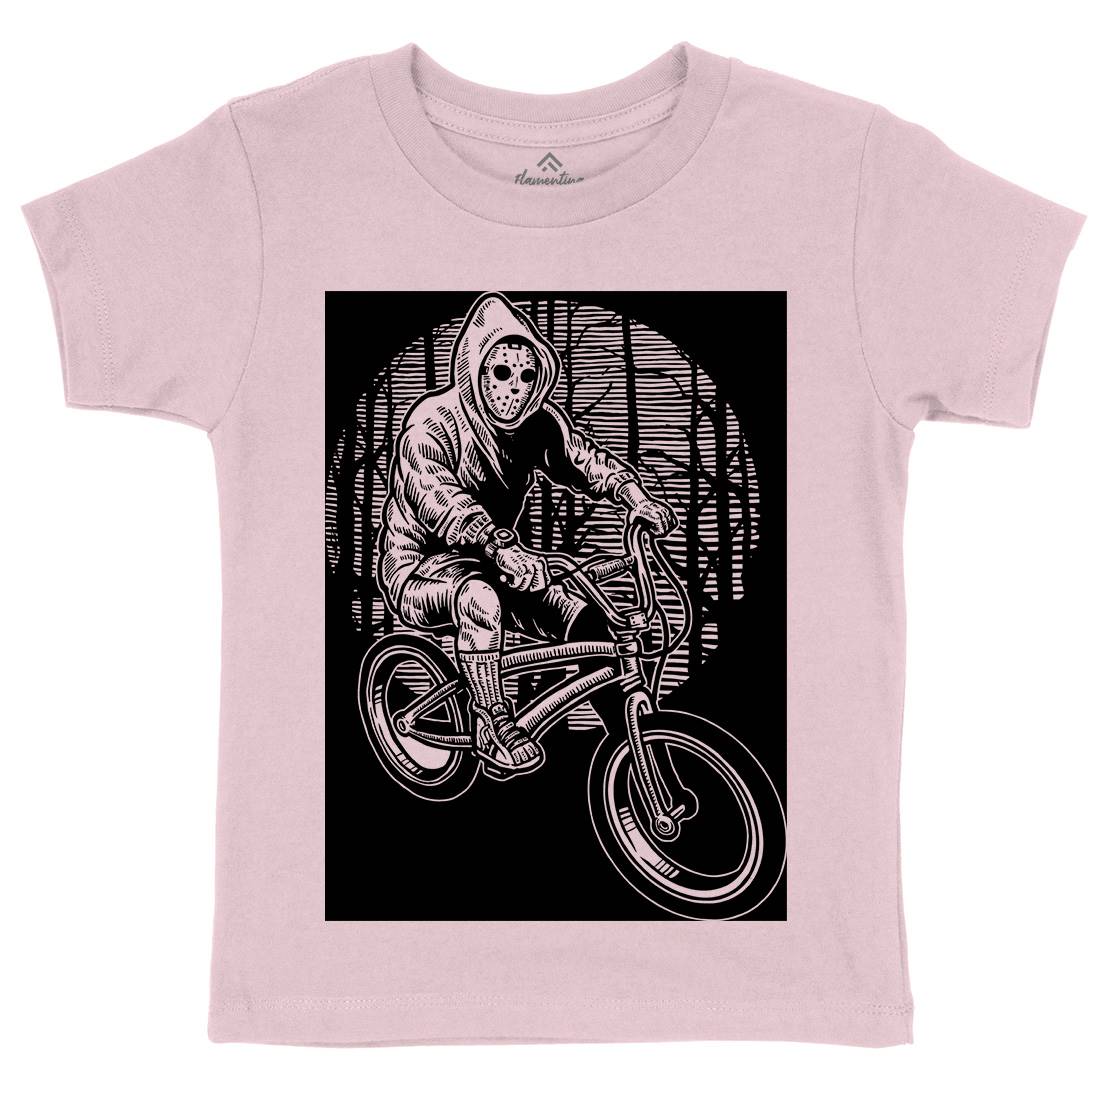 Ride Bike Kids Crew Neck T-Shirt Horror A563